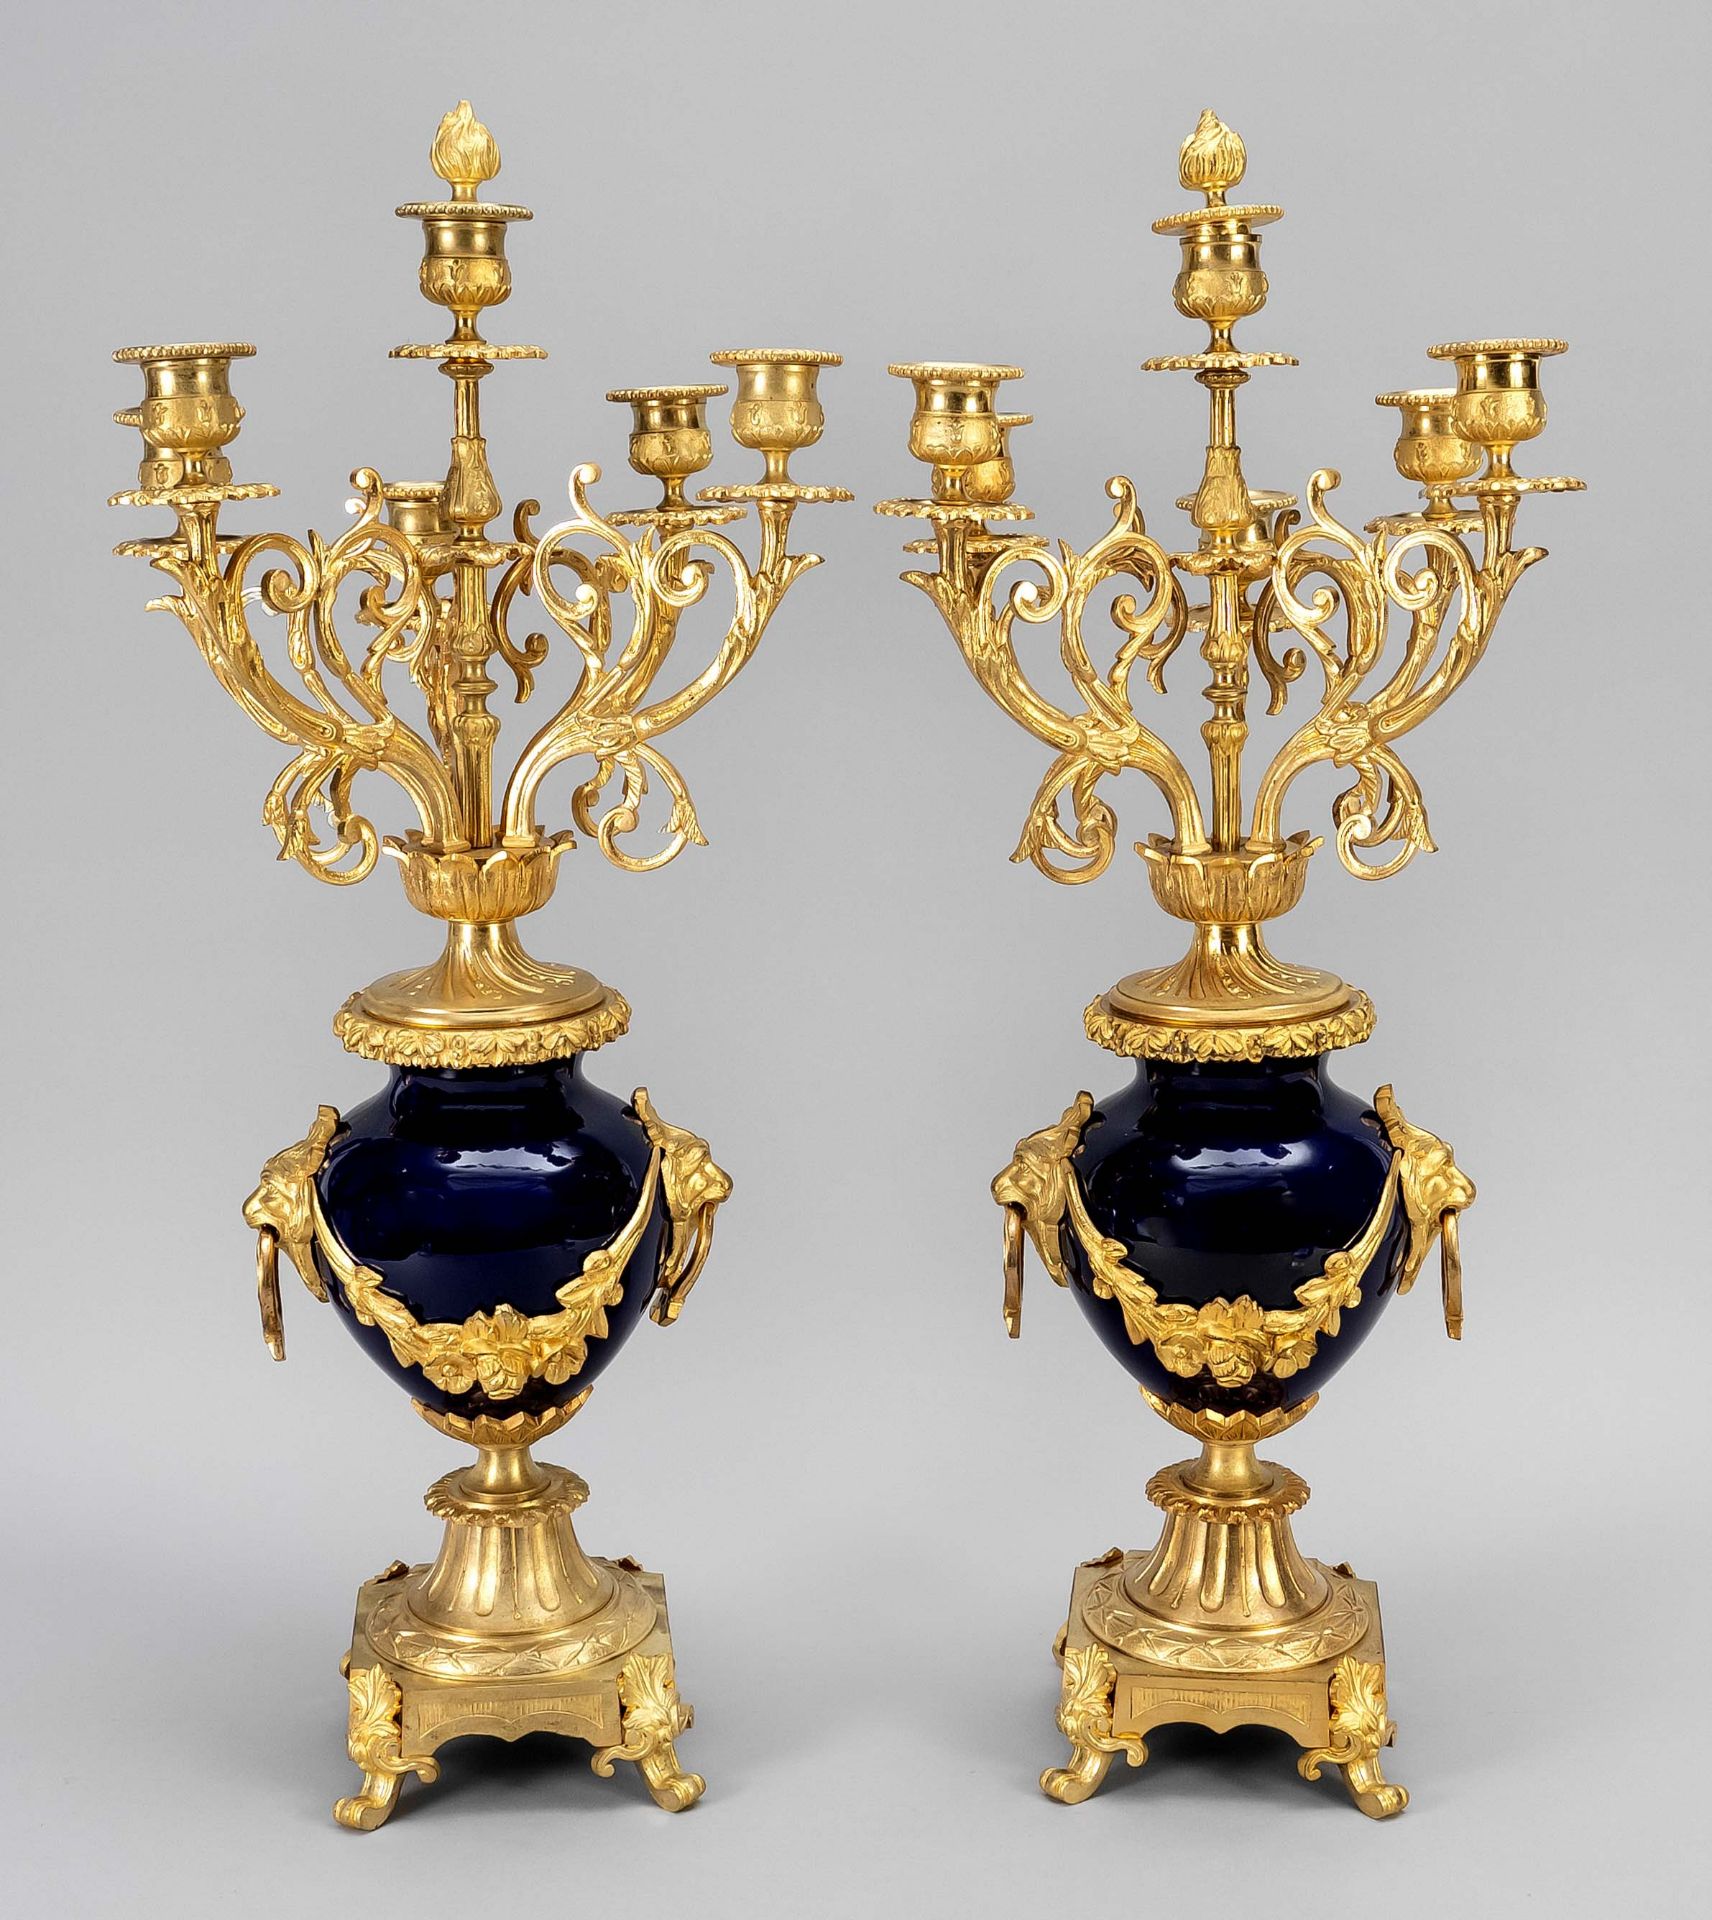 Pair of magnificent candlesticks, 19th c. bronze gilded, base on 4 feet, above cobalt blue porcelain